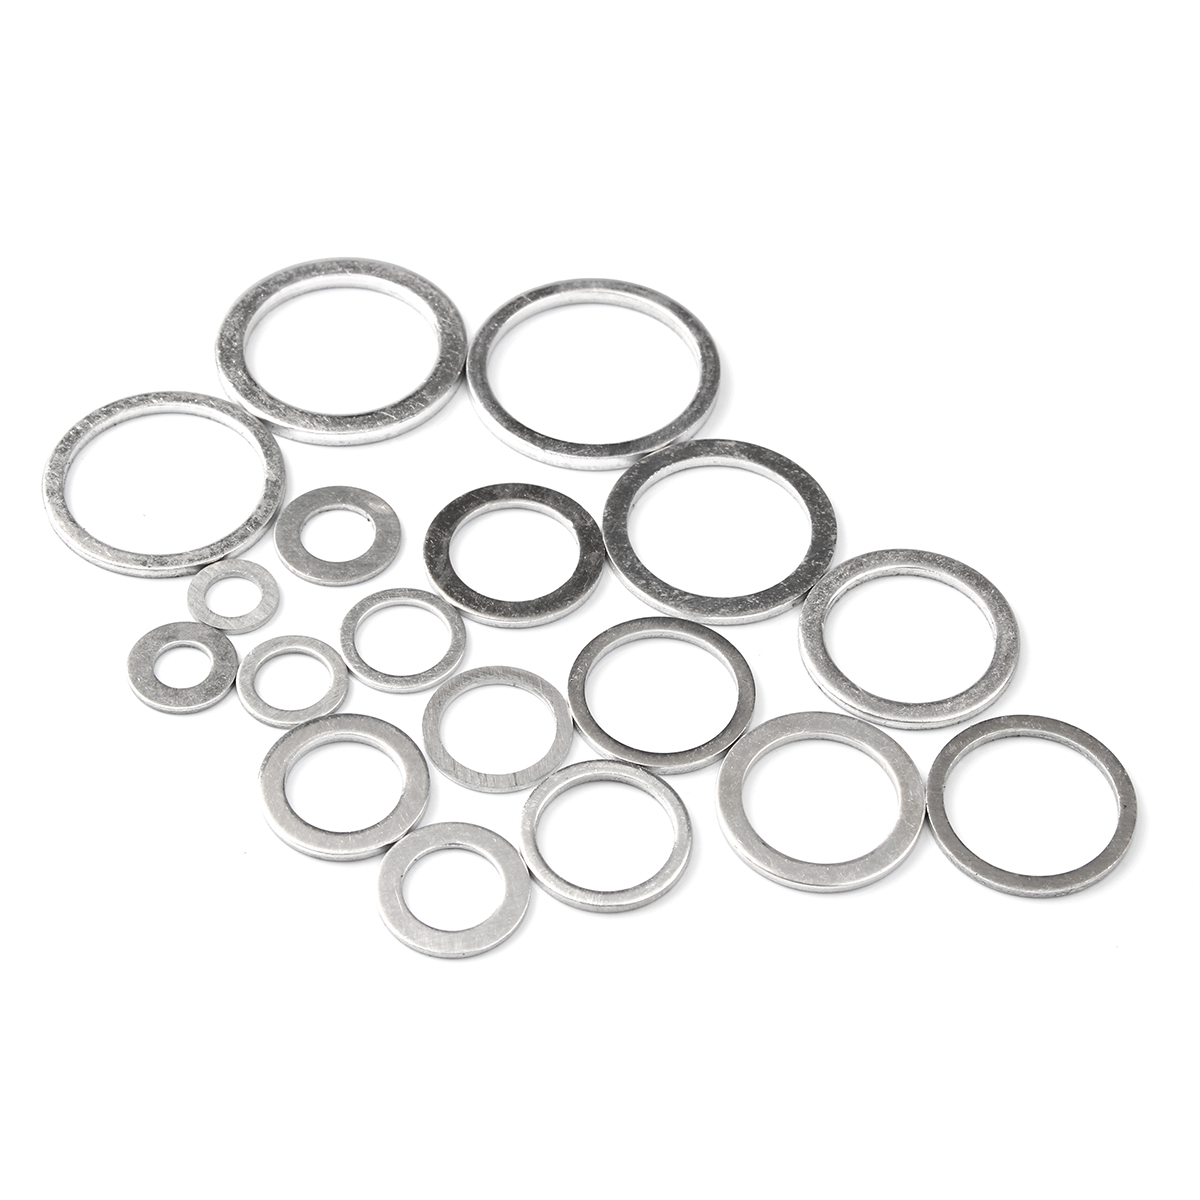 450Pcs Gaskets Washers Gasket Aluminum Flat Metal Washer Gasket Assorted Aluminum Sealing Rings set With Box